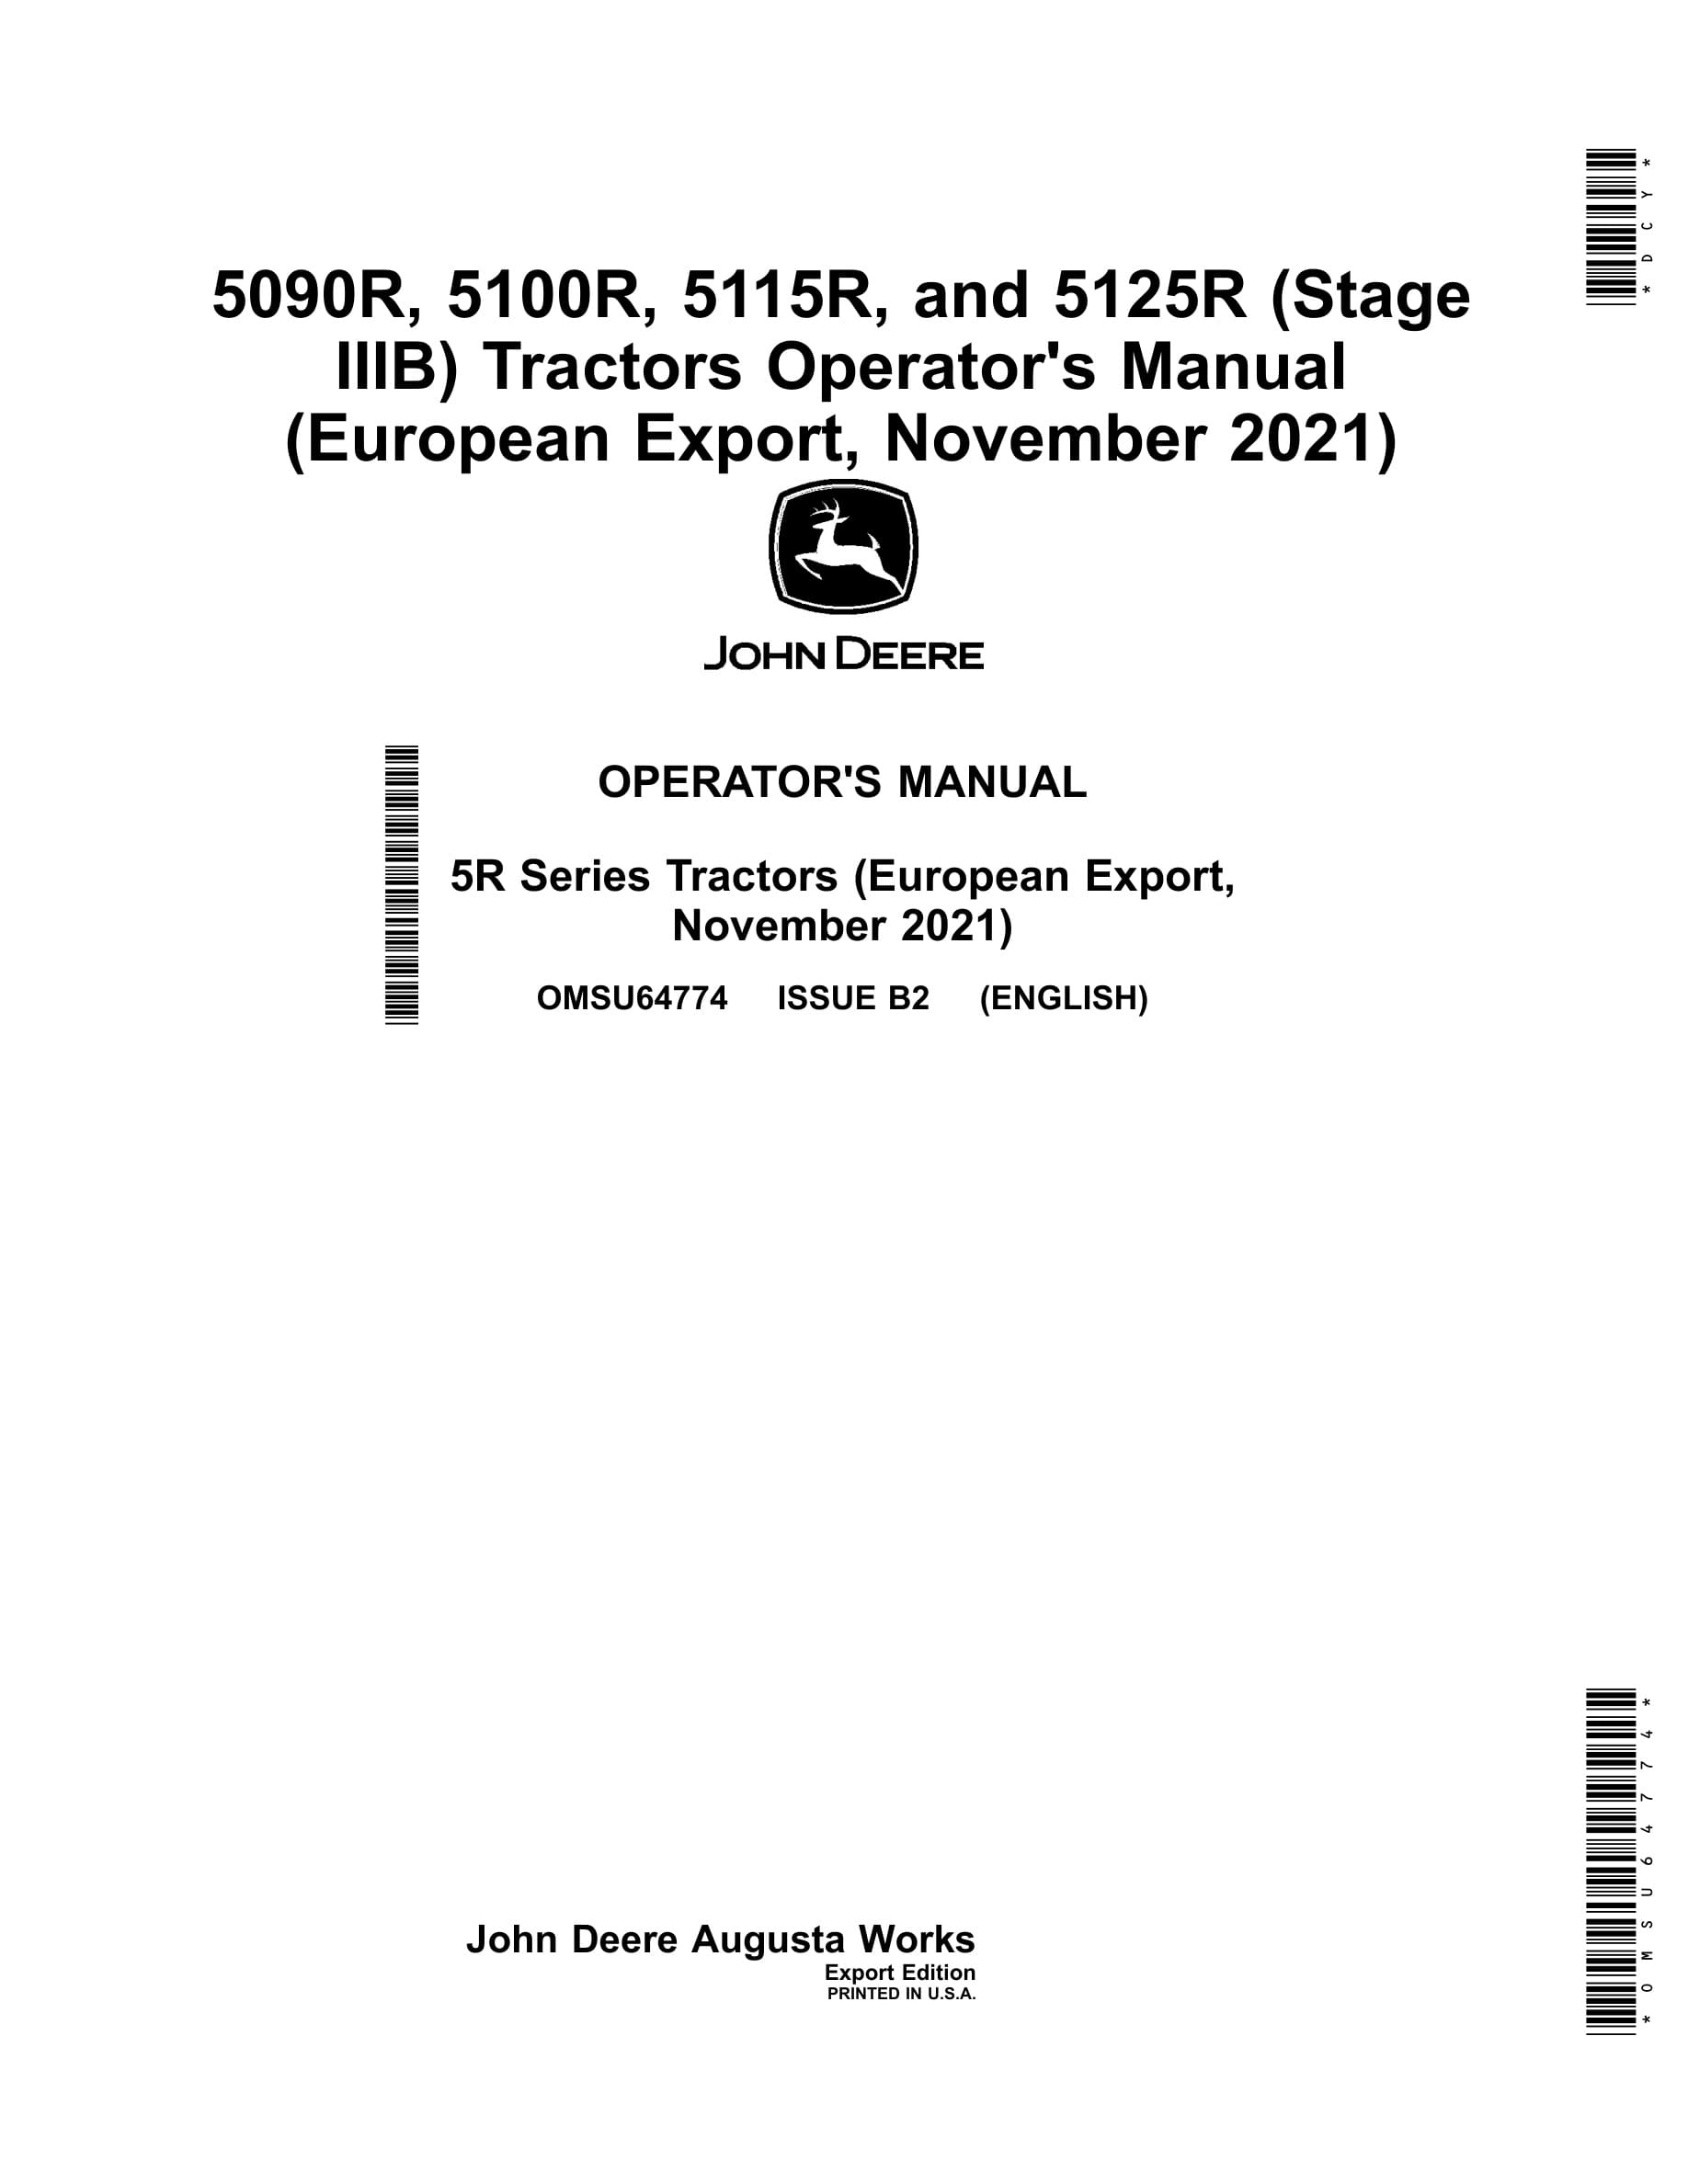 John Deere 5090r, 5100r, 5115r, And 5125r (stage Iiib) Tractors Operator Manuals OMSU64774-1